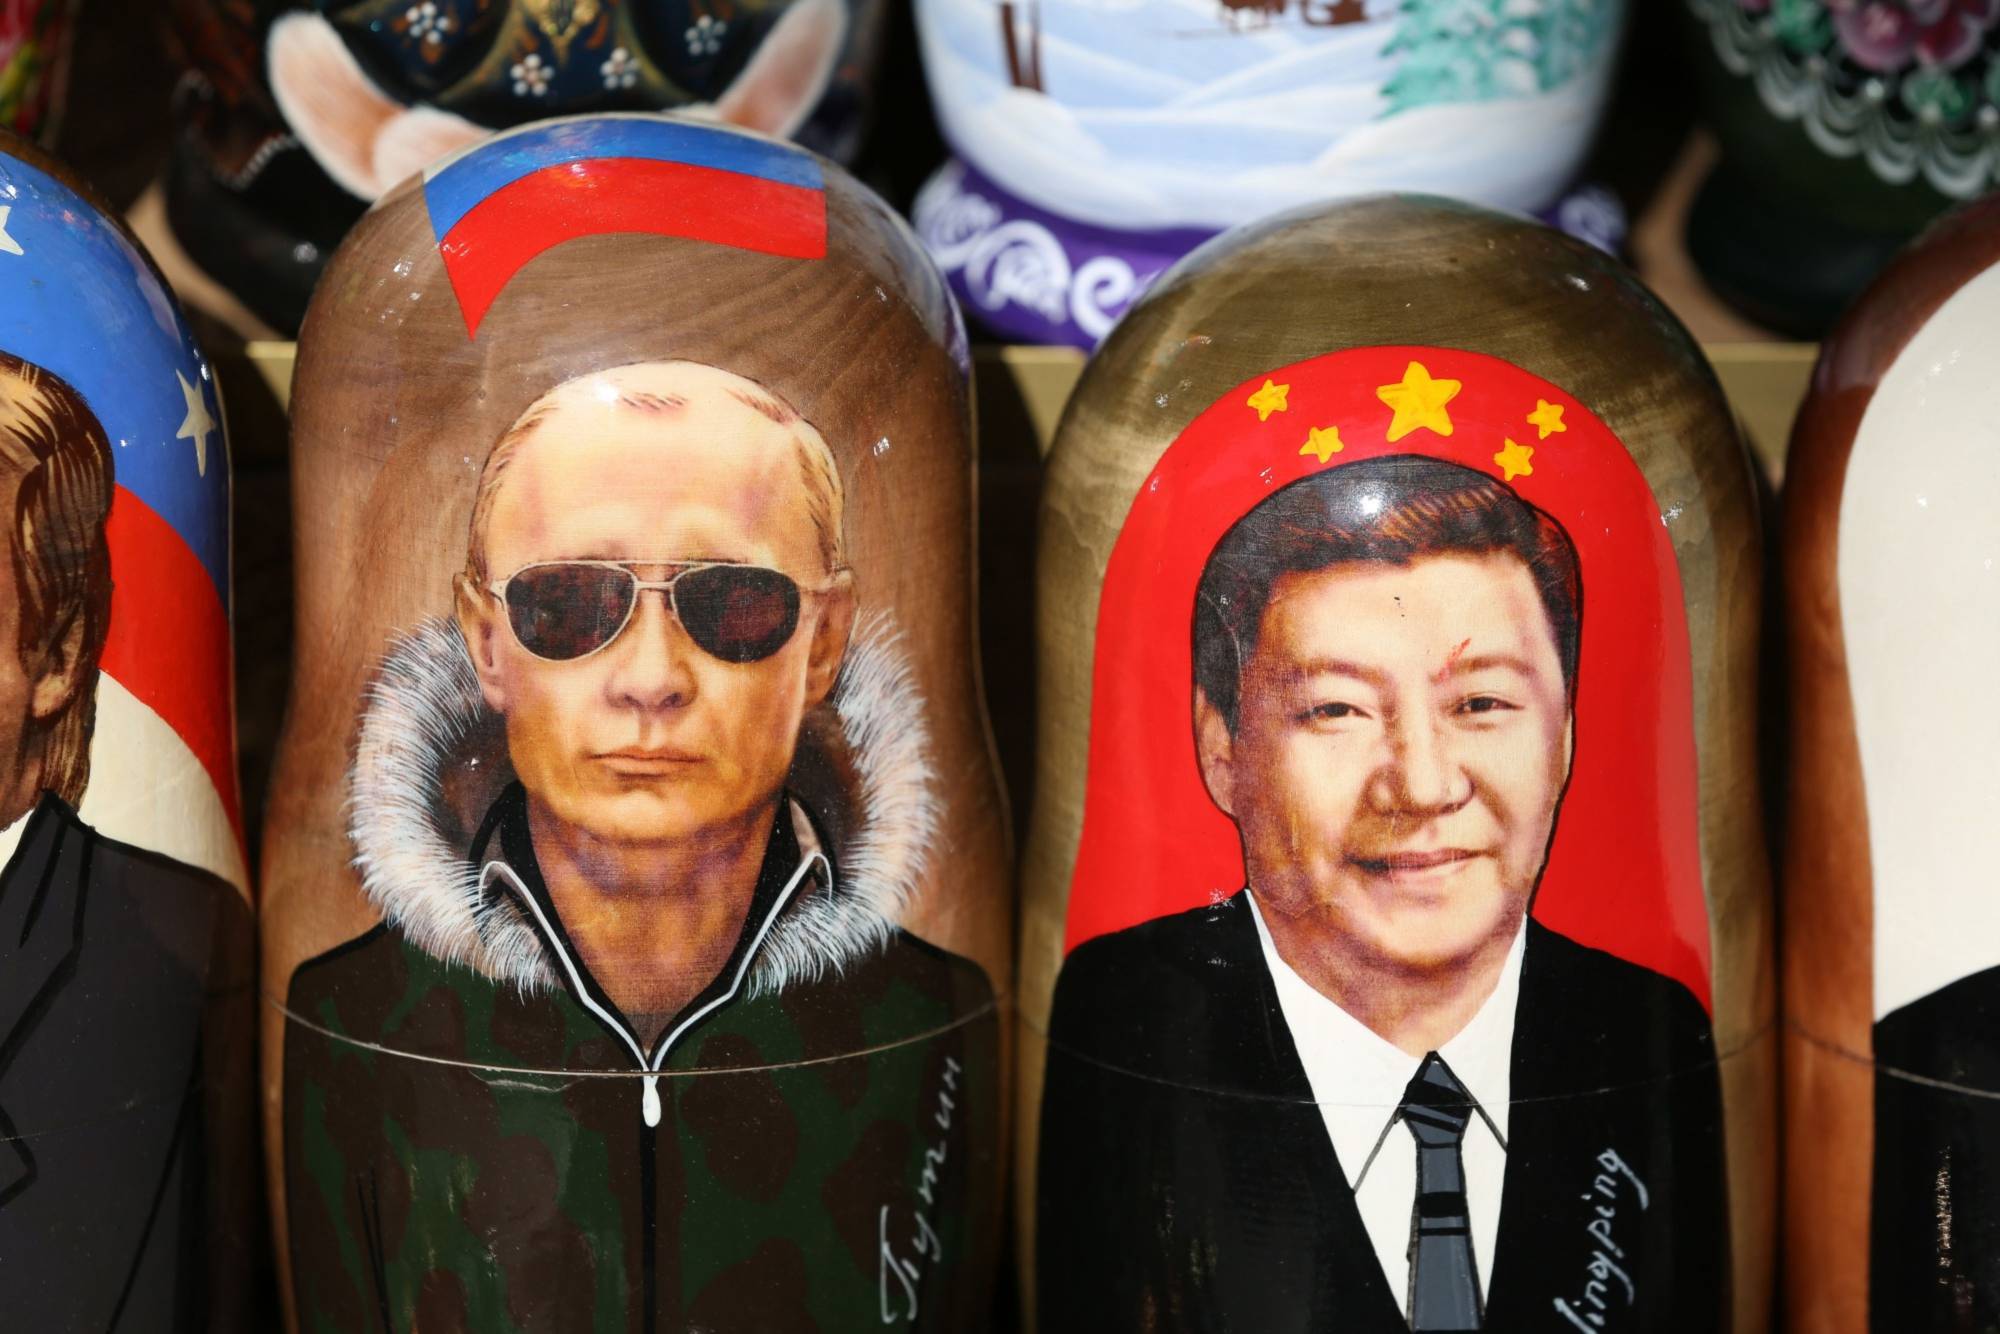 Matryoshka dolls depicting Russian President Vladimir Putin Chinese President Xi Jinping on display at a stall ahead of the St. Petersburg International Economic Forum (SPIEF) in St. Petersburg, in June, 2019.  | BLOOMBERG